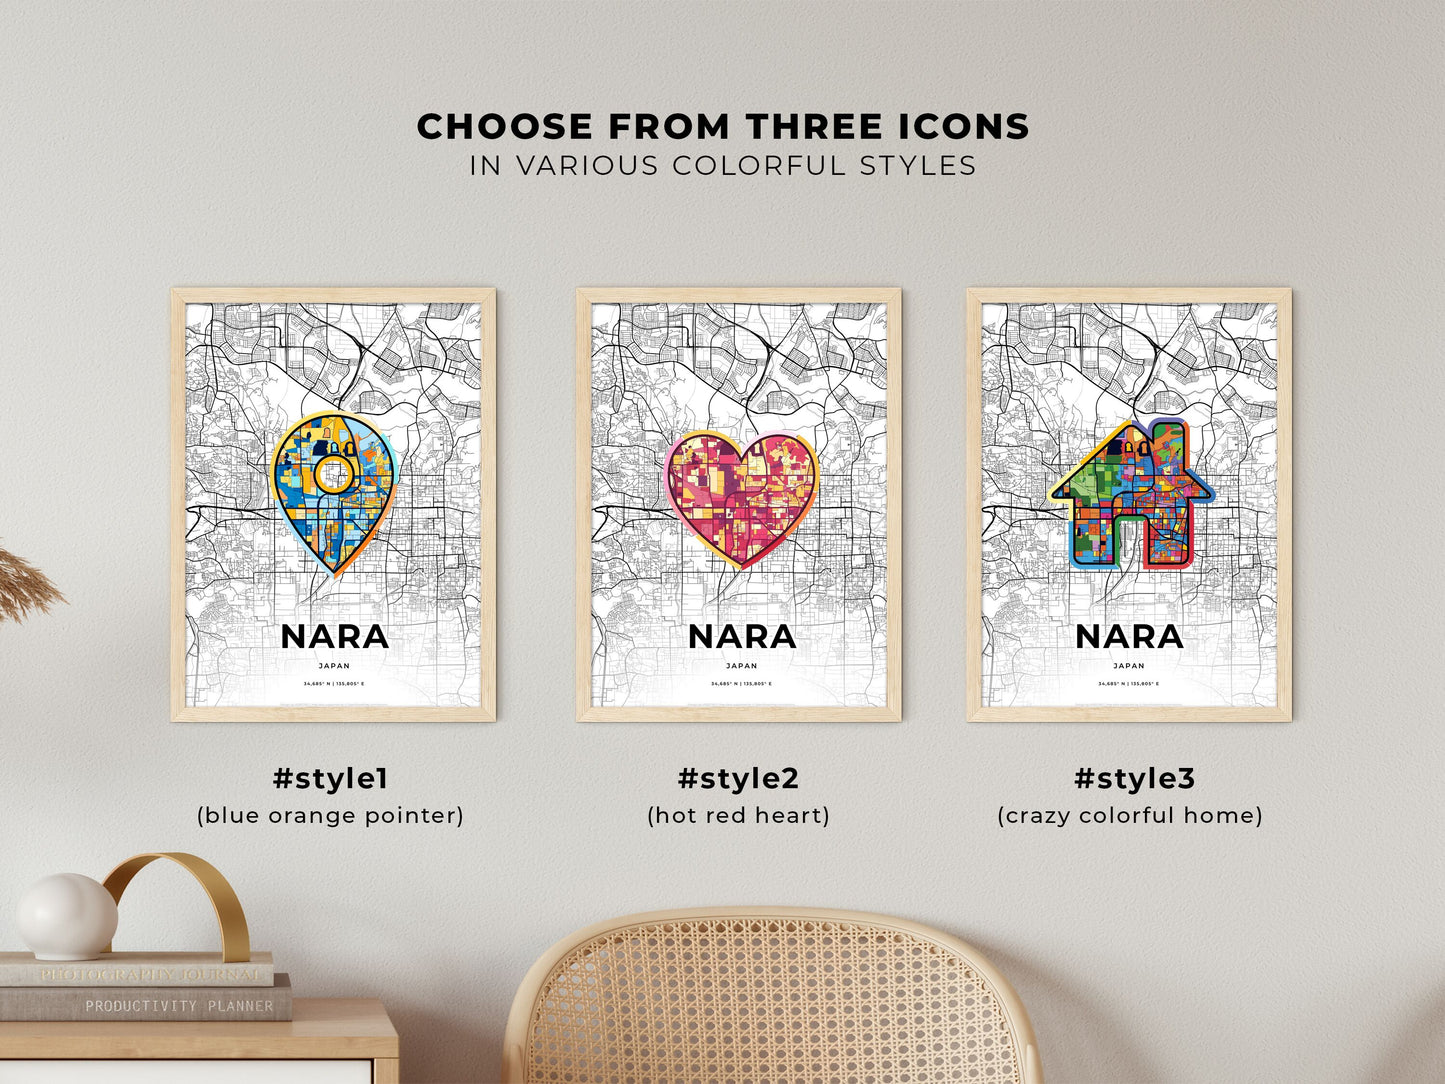 NARA JAPAN minimal art map with a colorful icon.